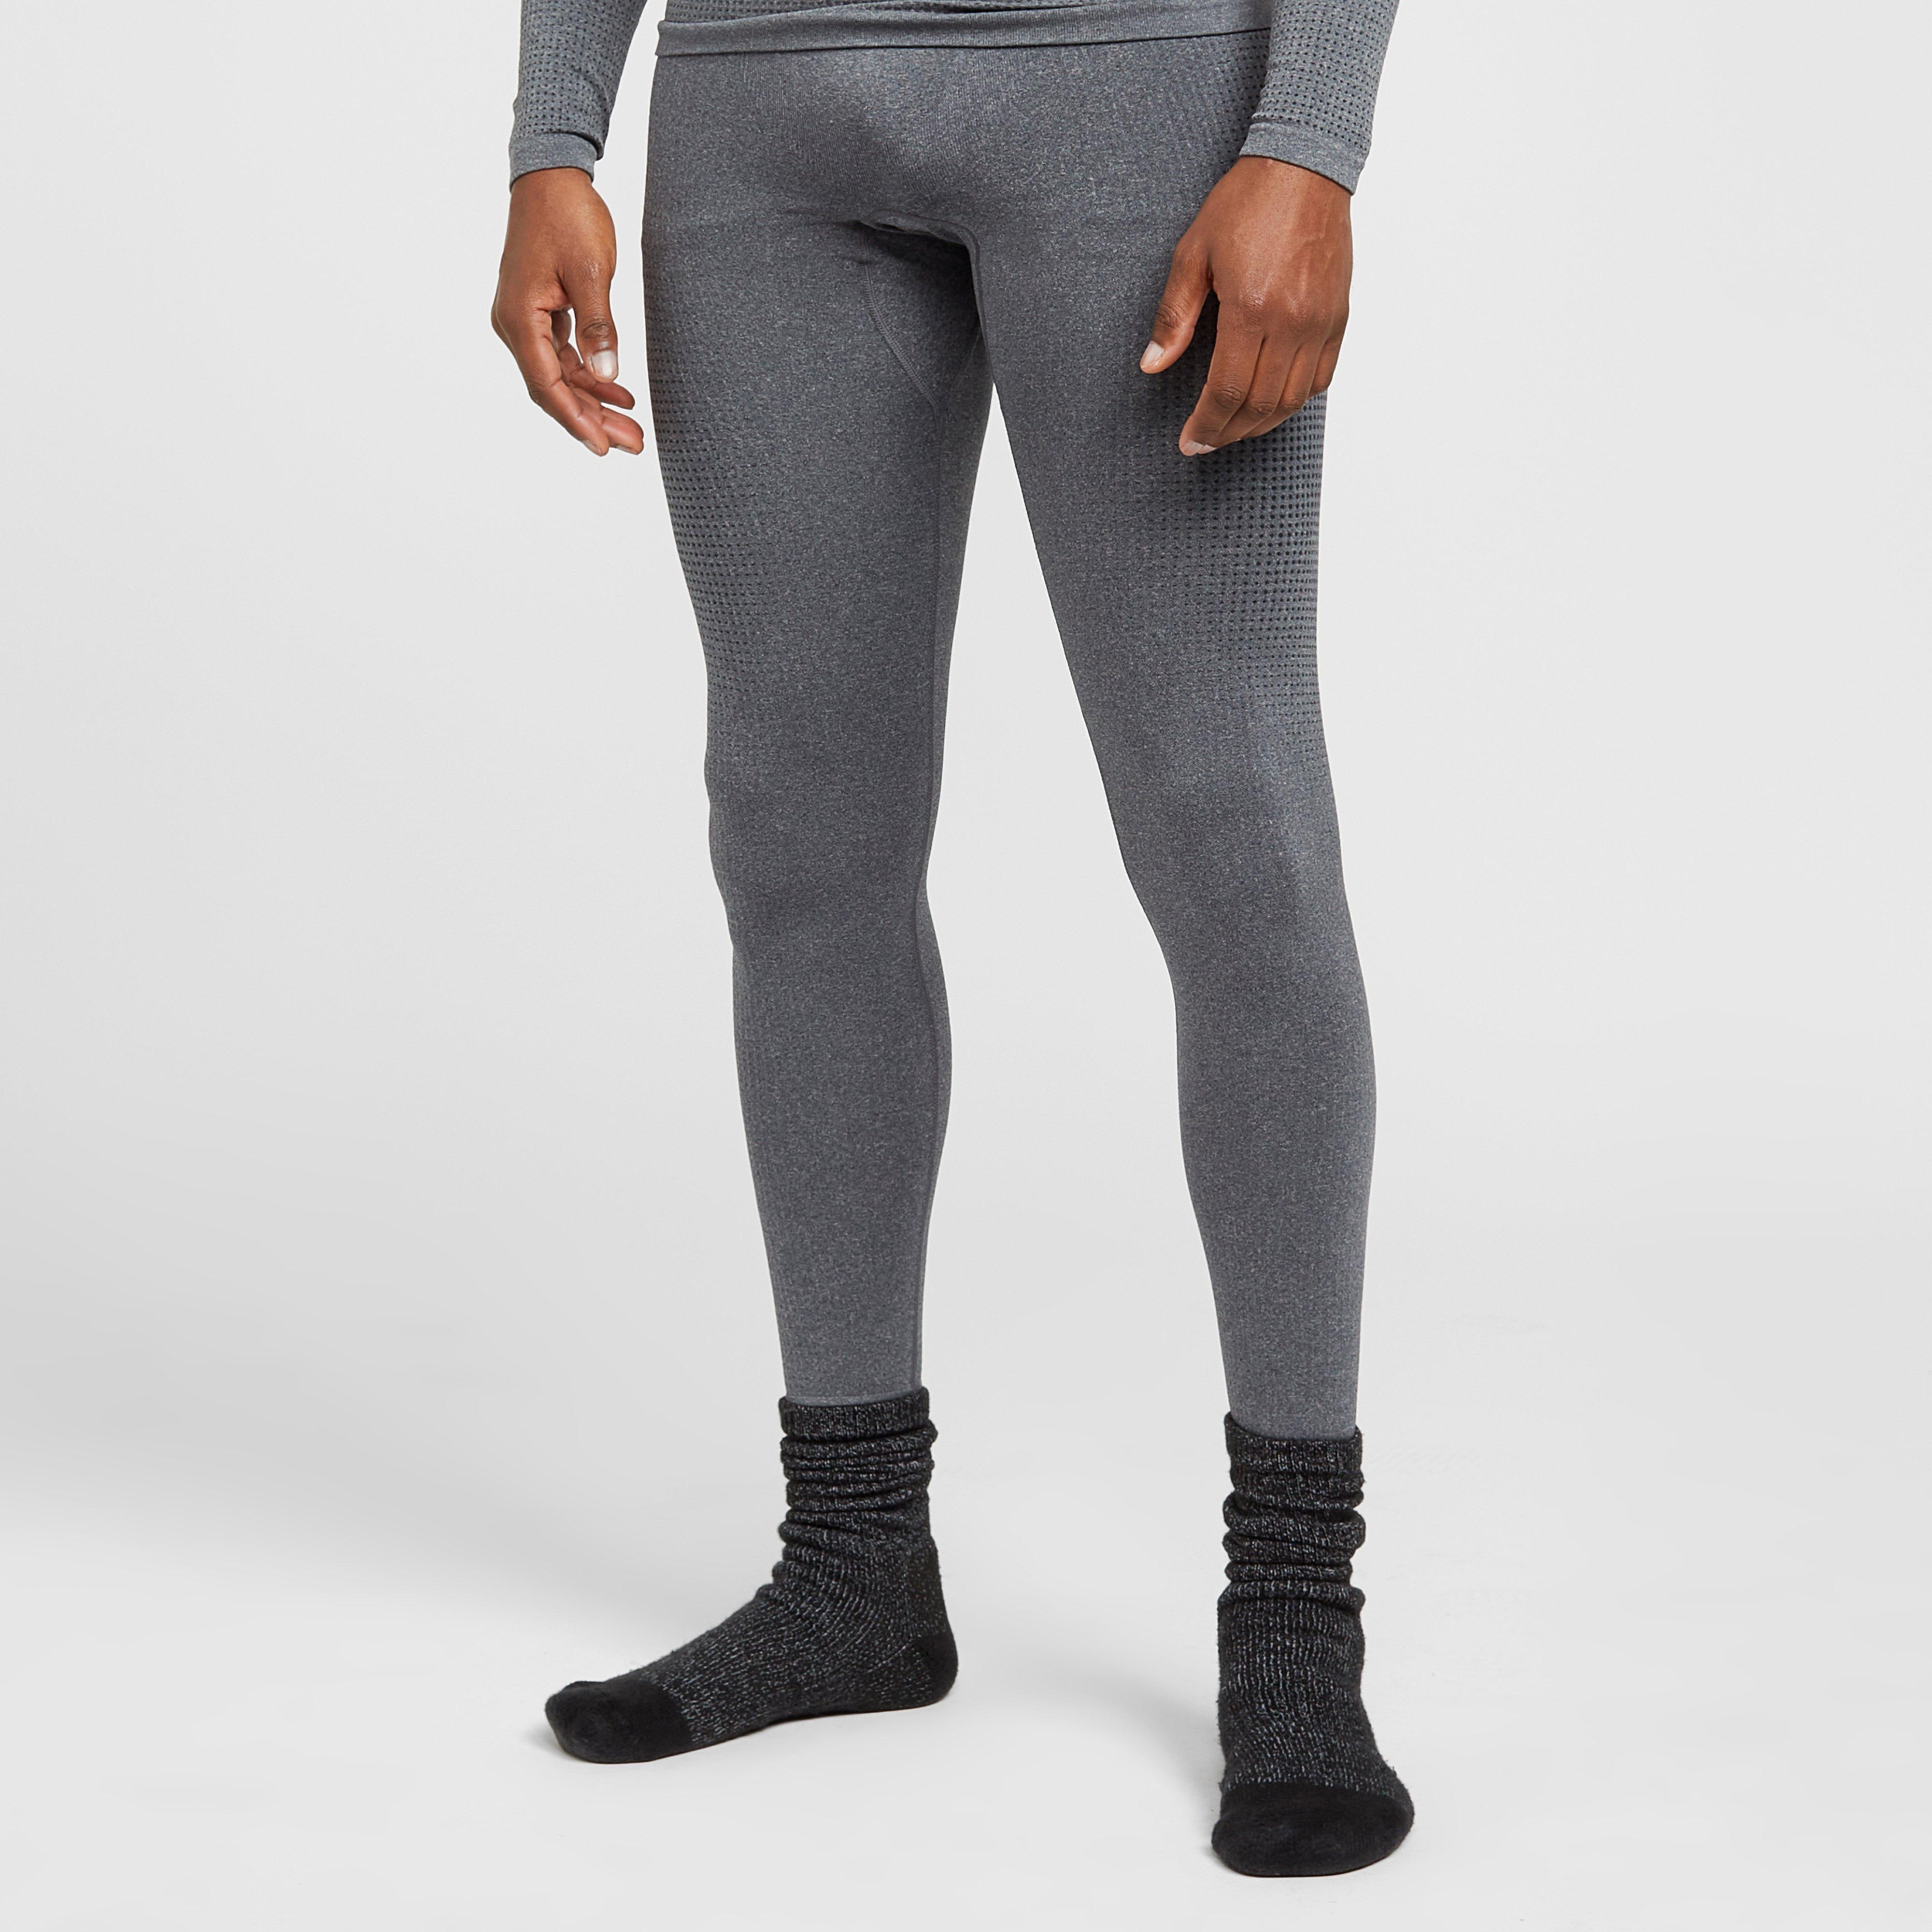 Image of Odlo Men's Performance Warm Eco Leggings - Grey/Grey, GREY/GREY